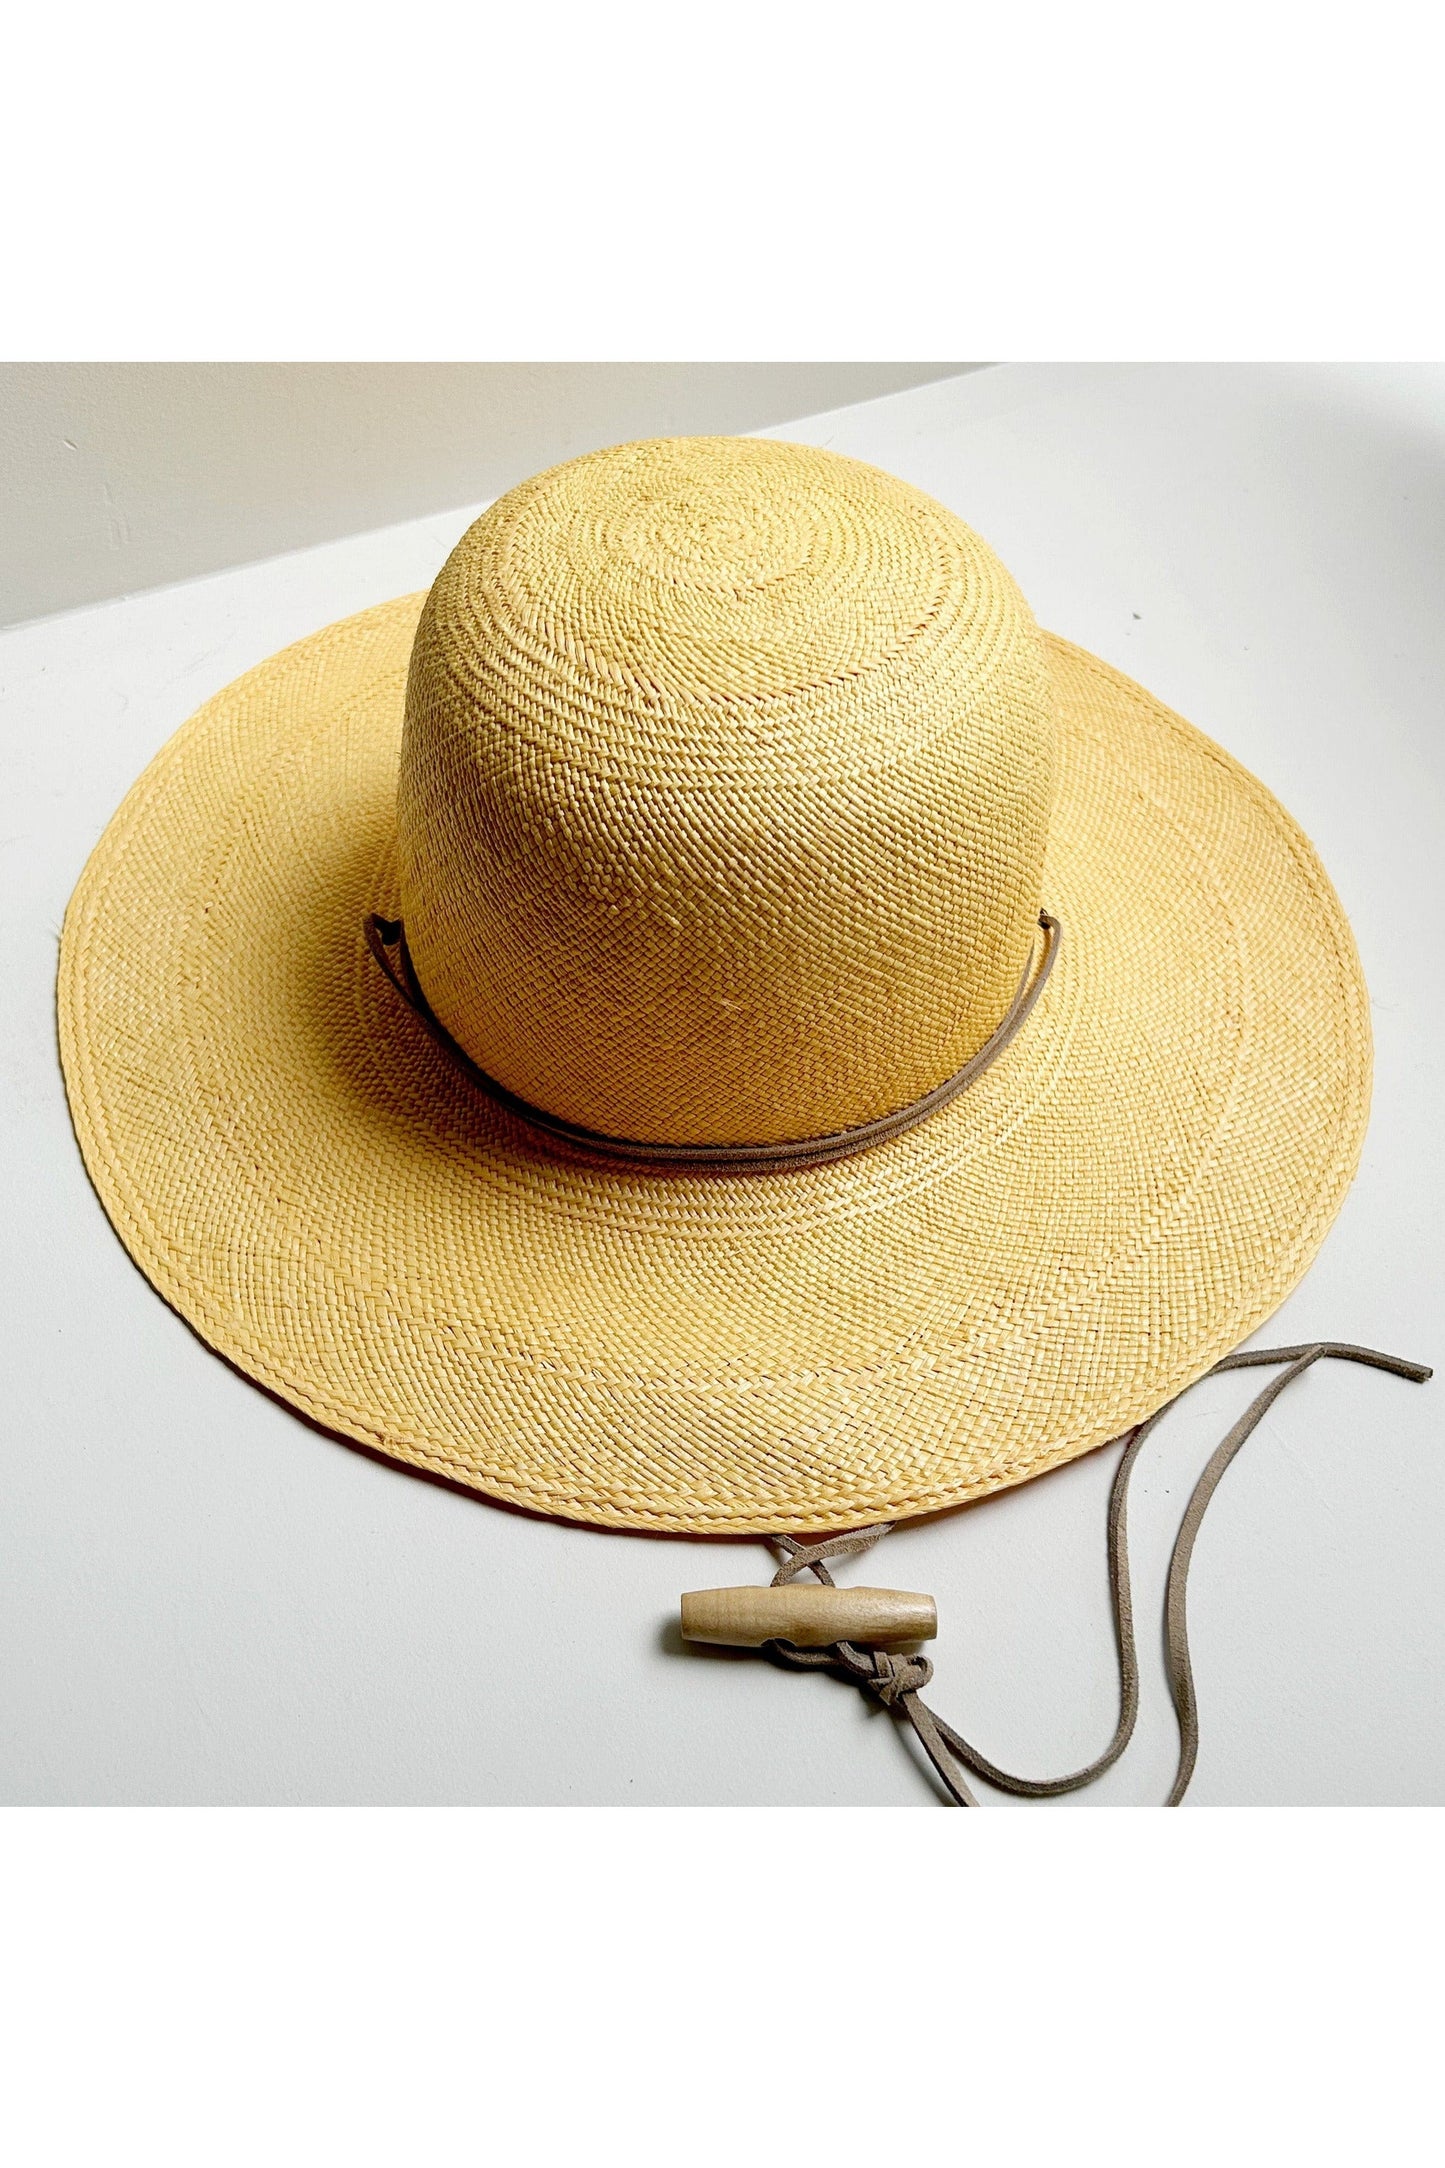 Suncrest Sun Hat in Panama Straw Accessories Brookes Boswell   